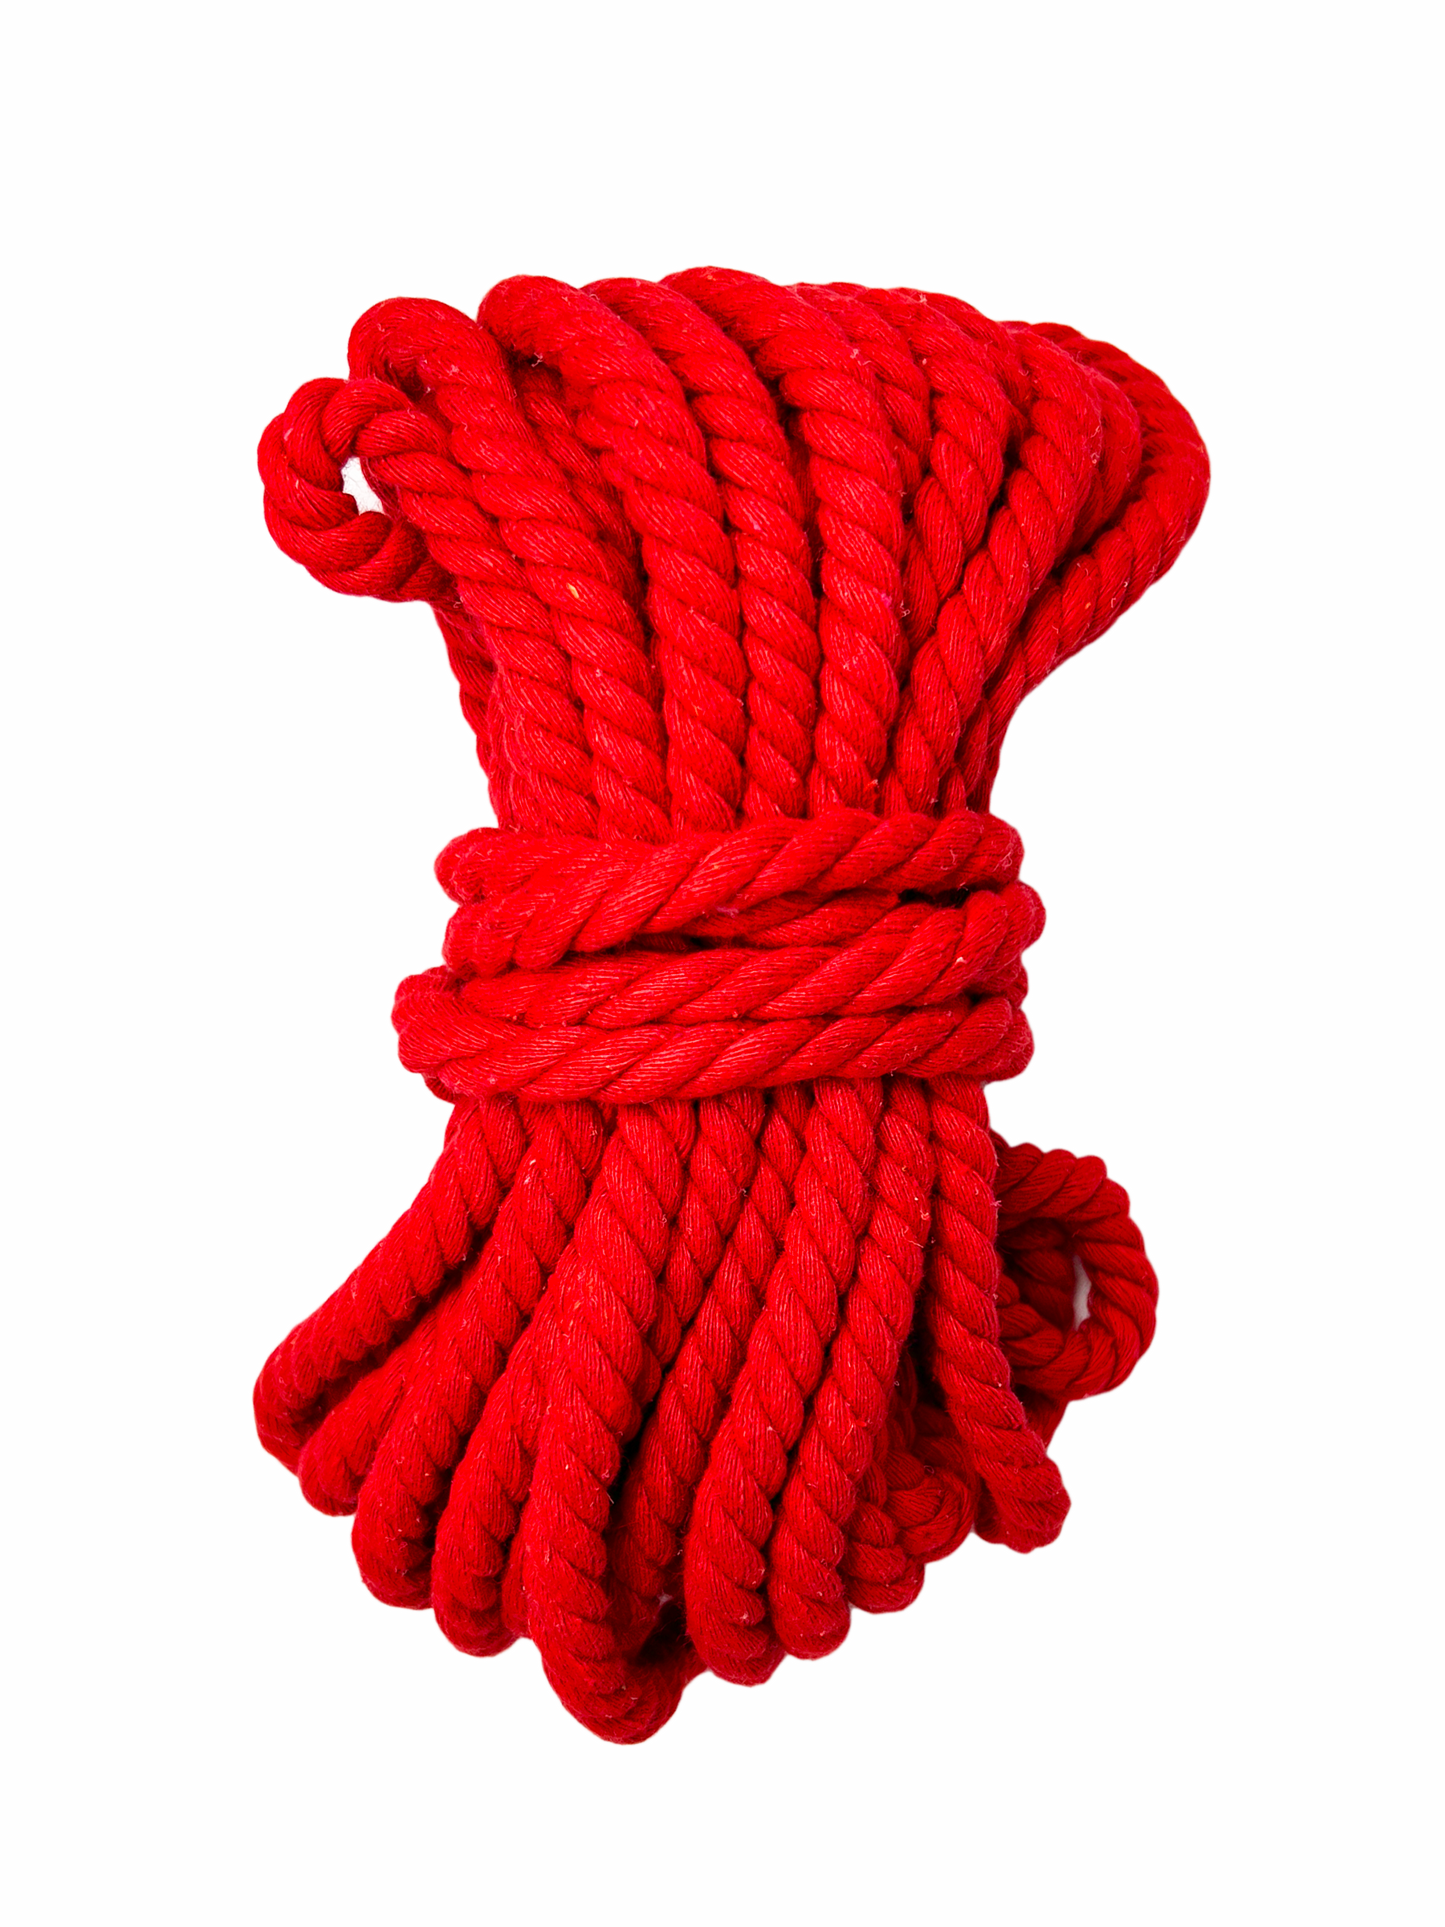 Twisted Love Cotton Bondage Rope